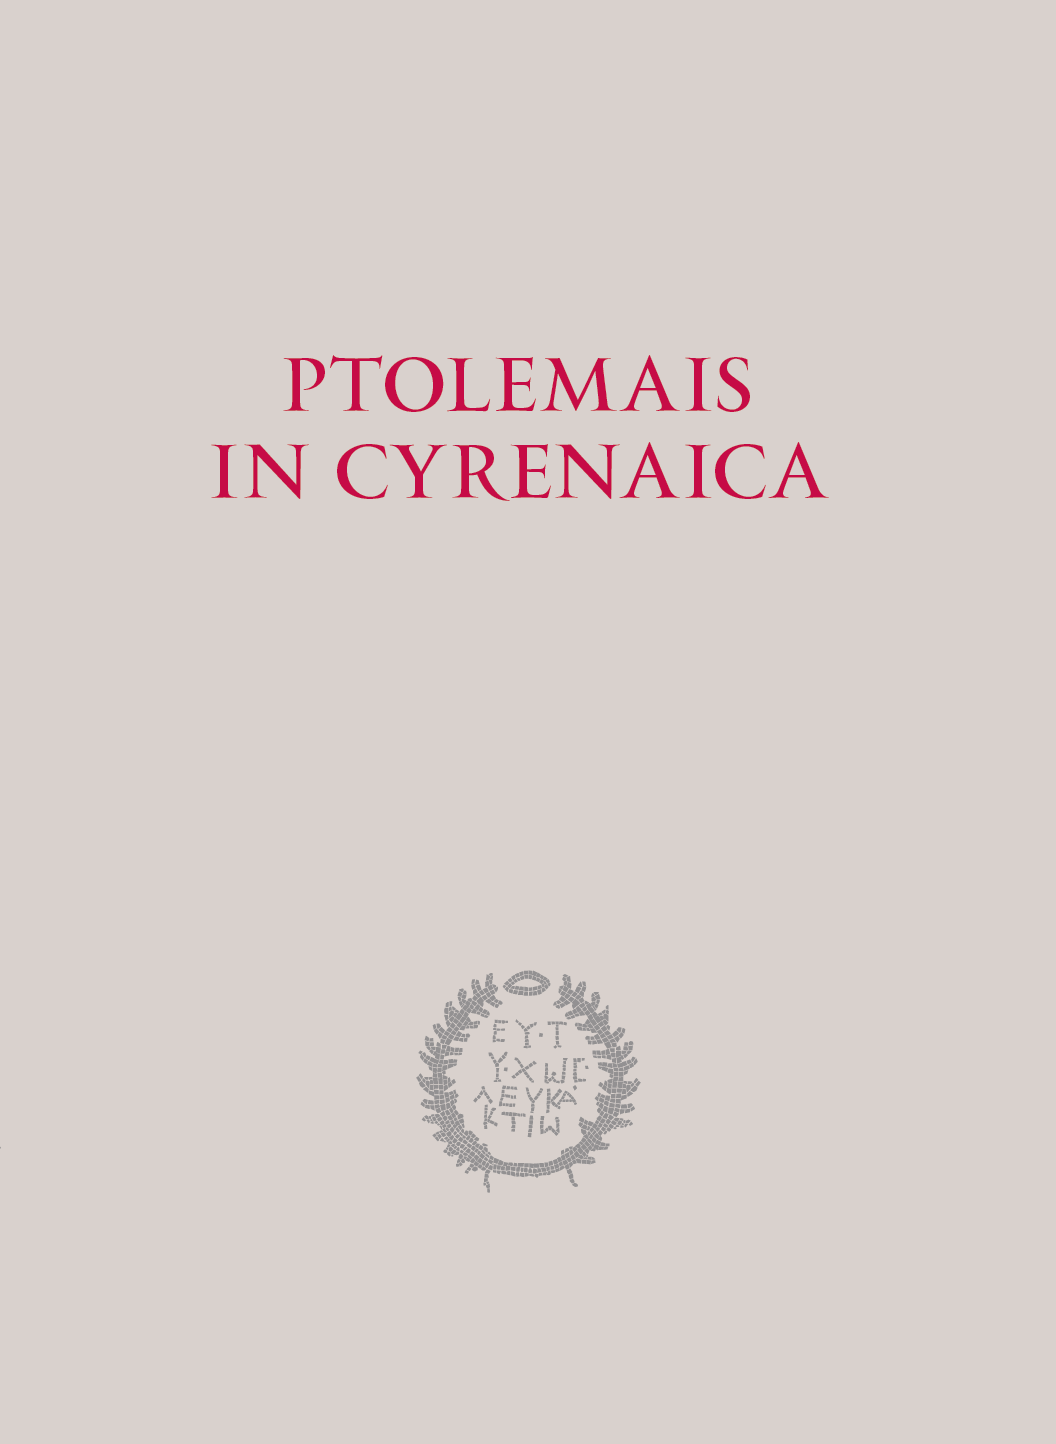 Ptolemais in Cyrenaica. Results on Non-Invasive Surveys